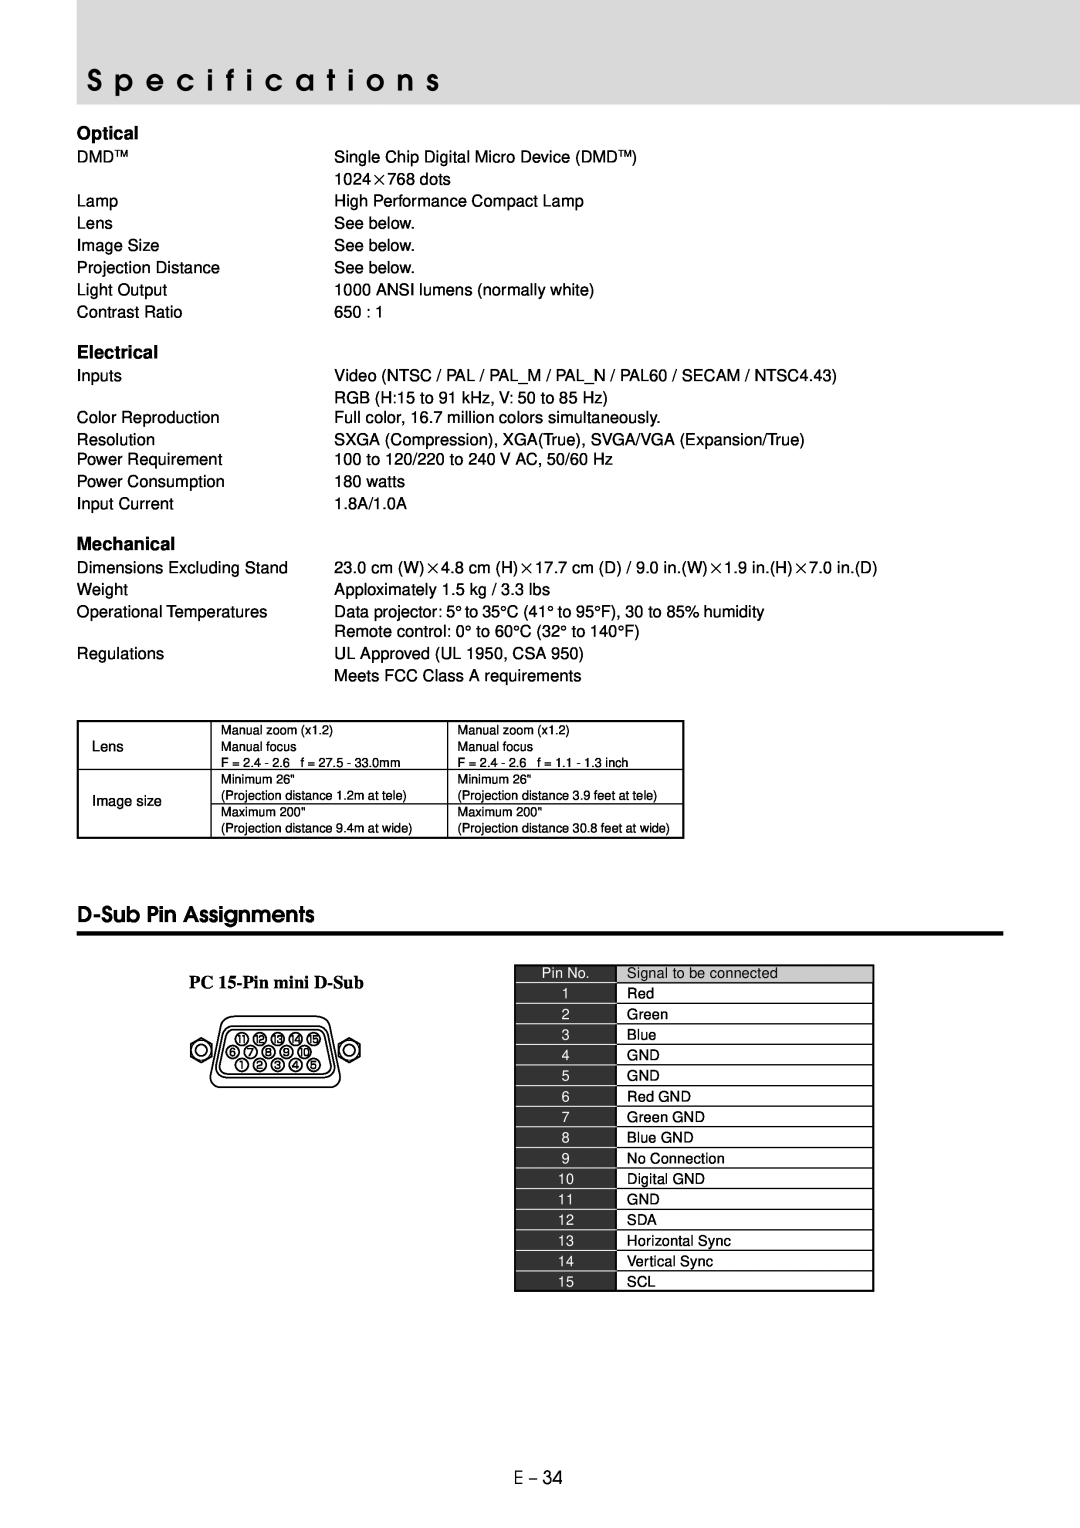 Mitsubishi Electronics XD20A user manual S p e c i f i c a t i o n s, D-Sub Pin Assignments, PC 15-Pin mini D-Sub 